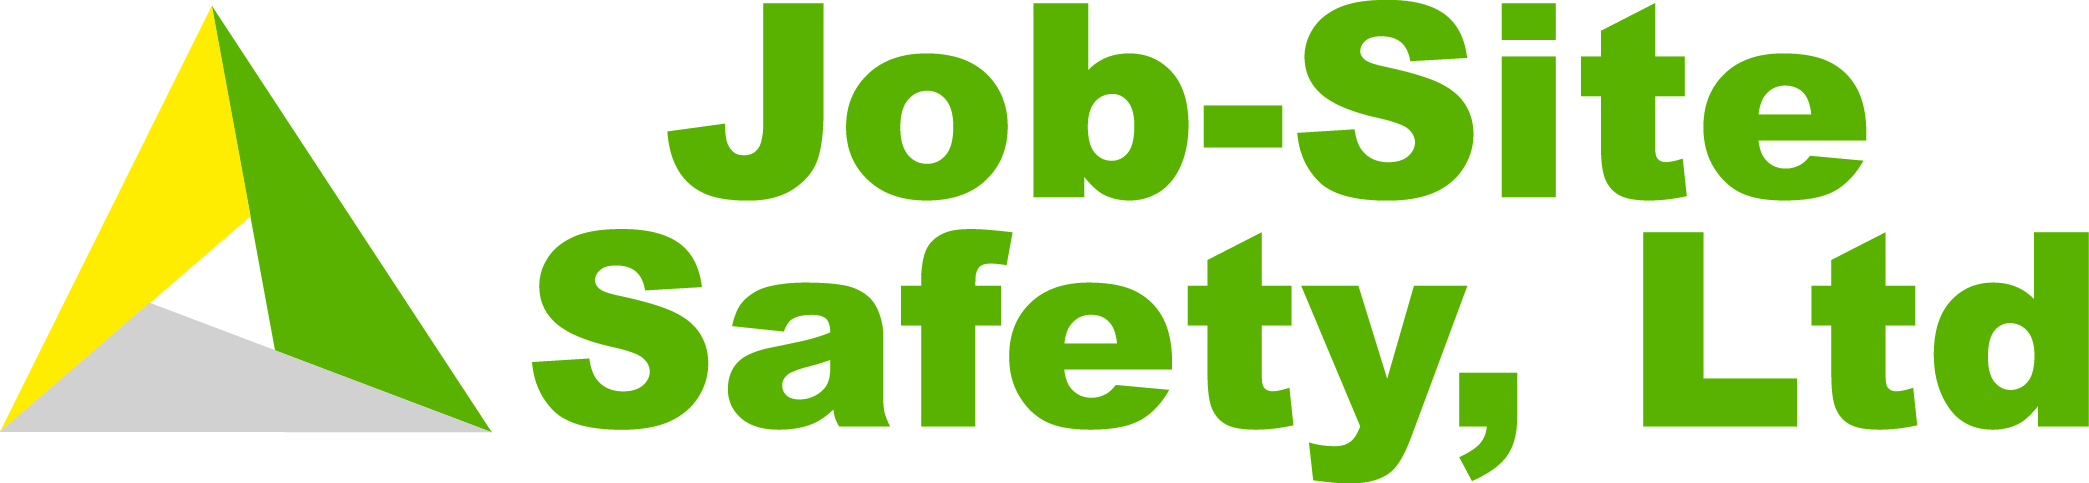 Job-Site Safety, Ltd. logo